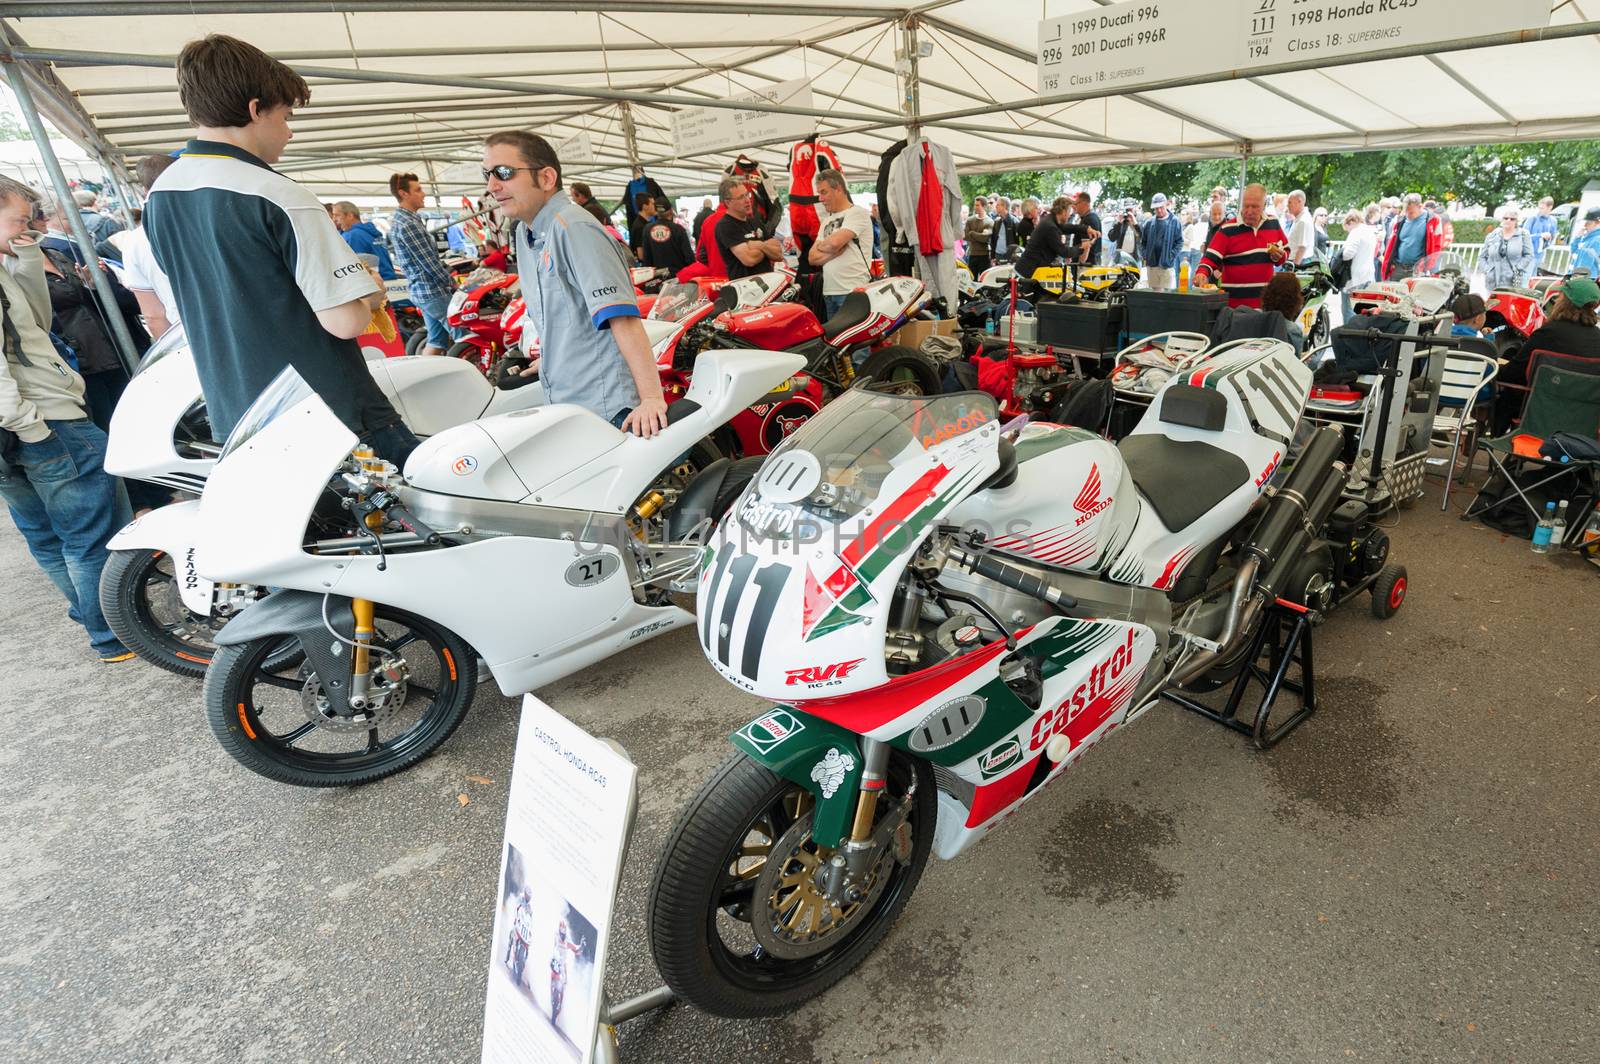 Honda and Ducati by nelsonart